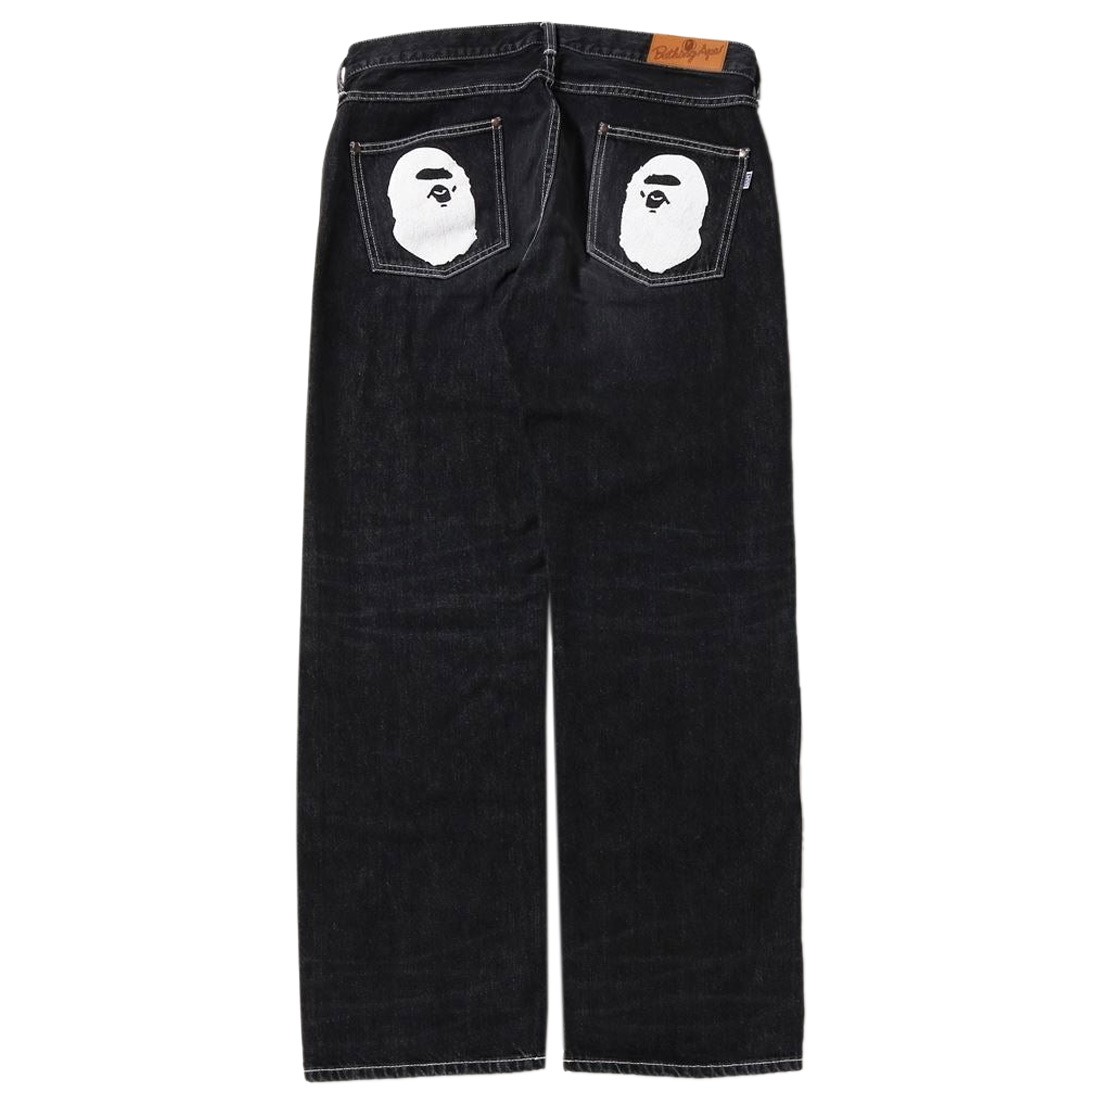 Buy Black Jeans for Men by ROOKIES Online | Ajio.com